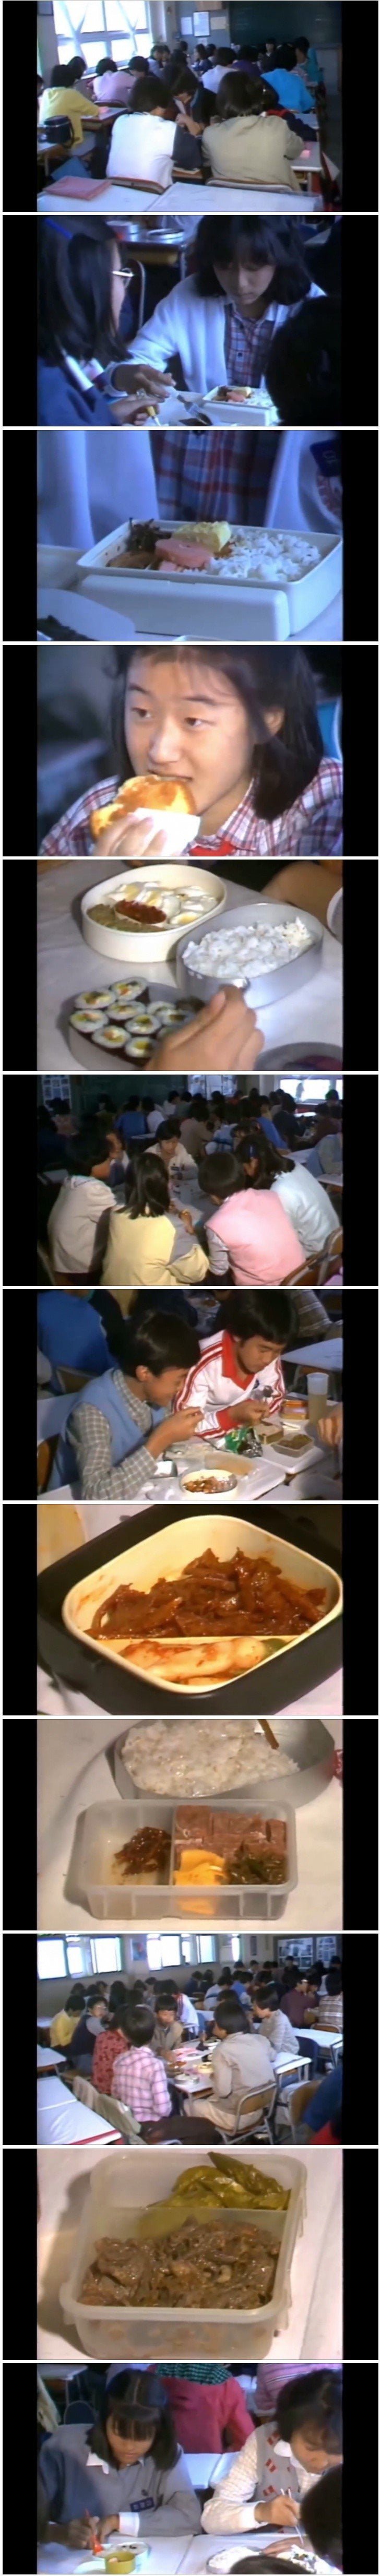 nokbeon.net-한국 80년대 점심식사풍경-1번 이미지